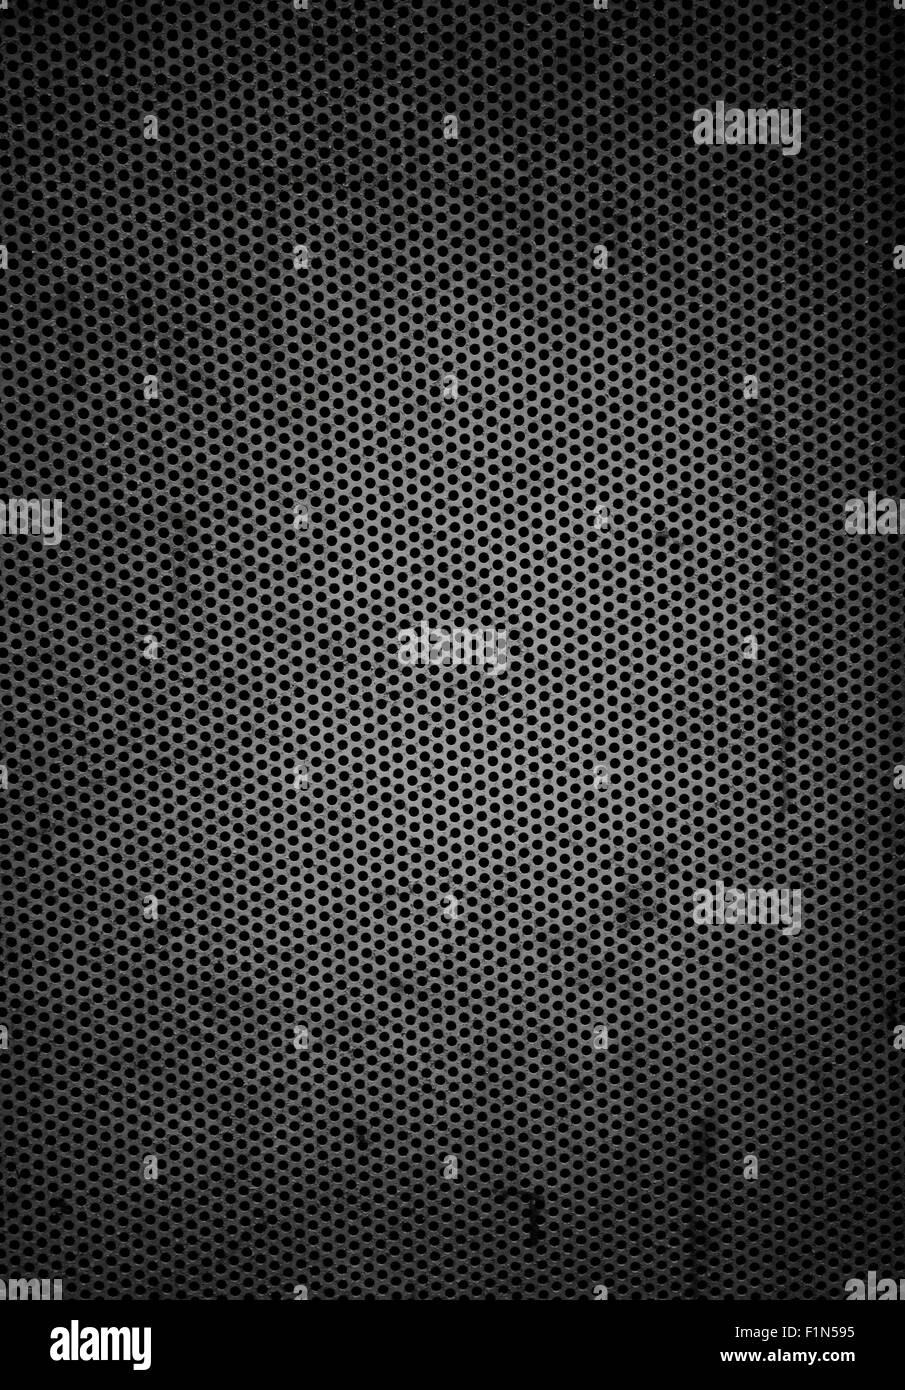 Rough textured blank metal mesh photo background Stock Photo